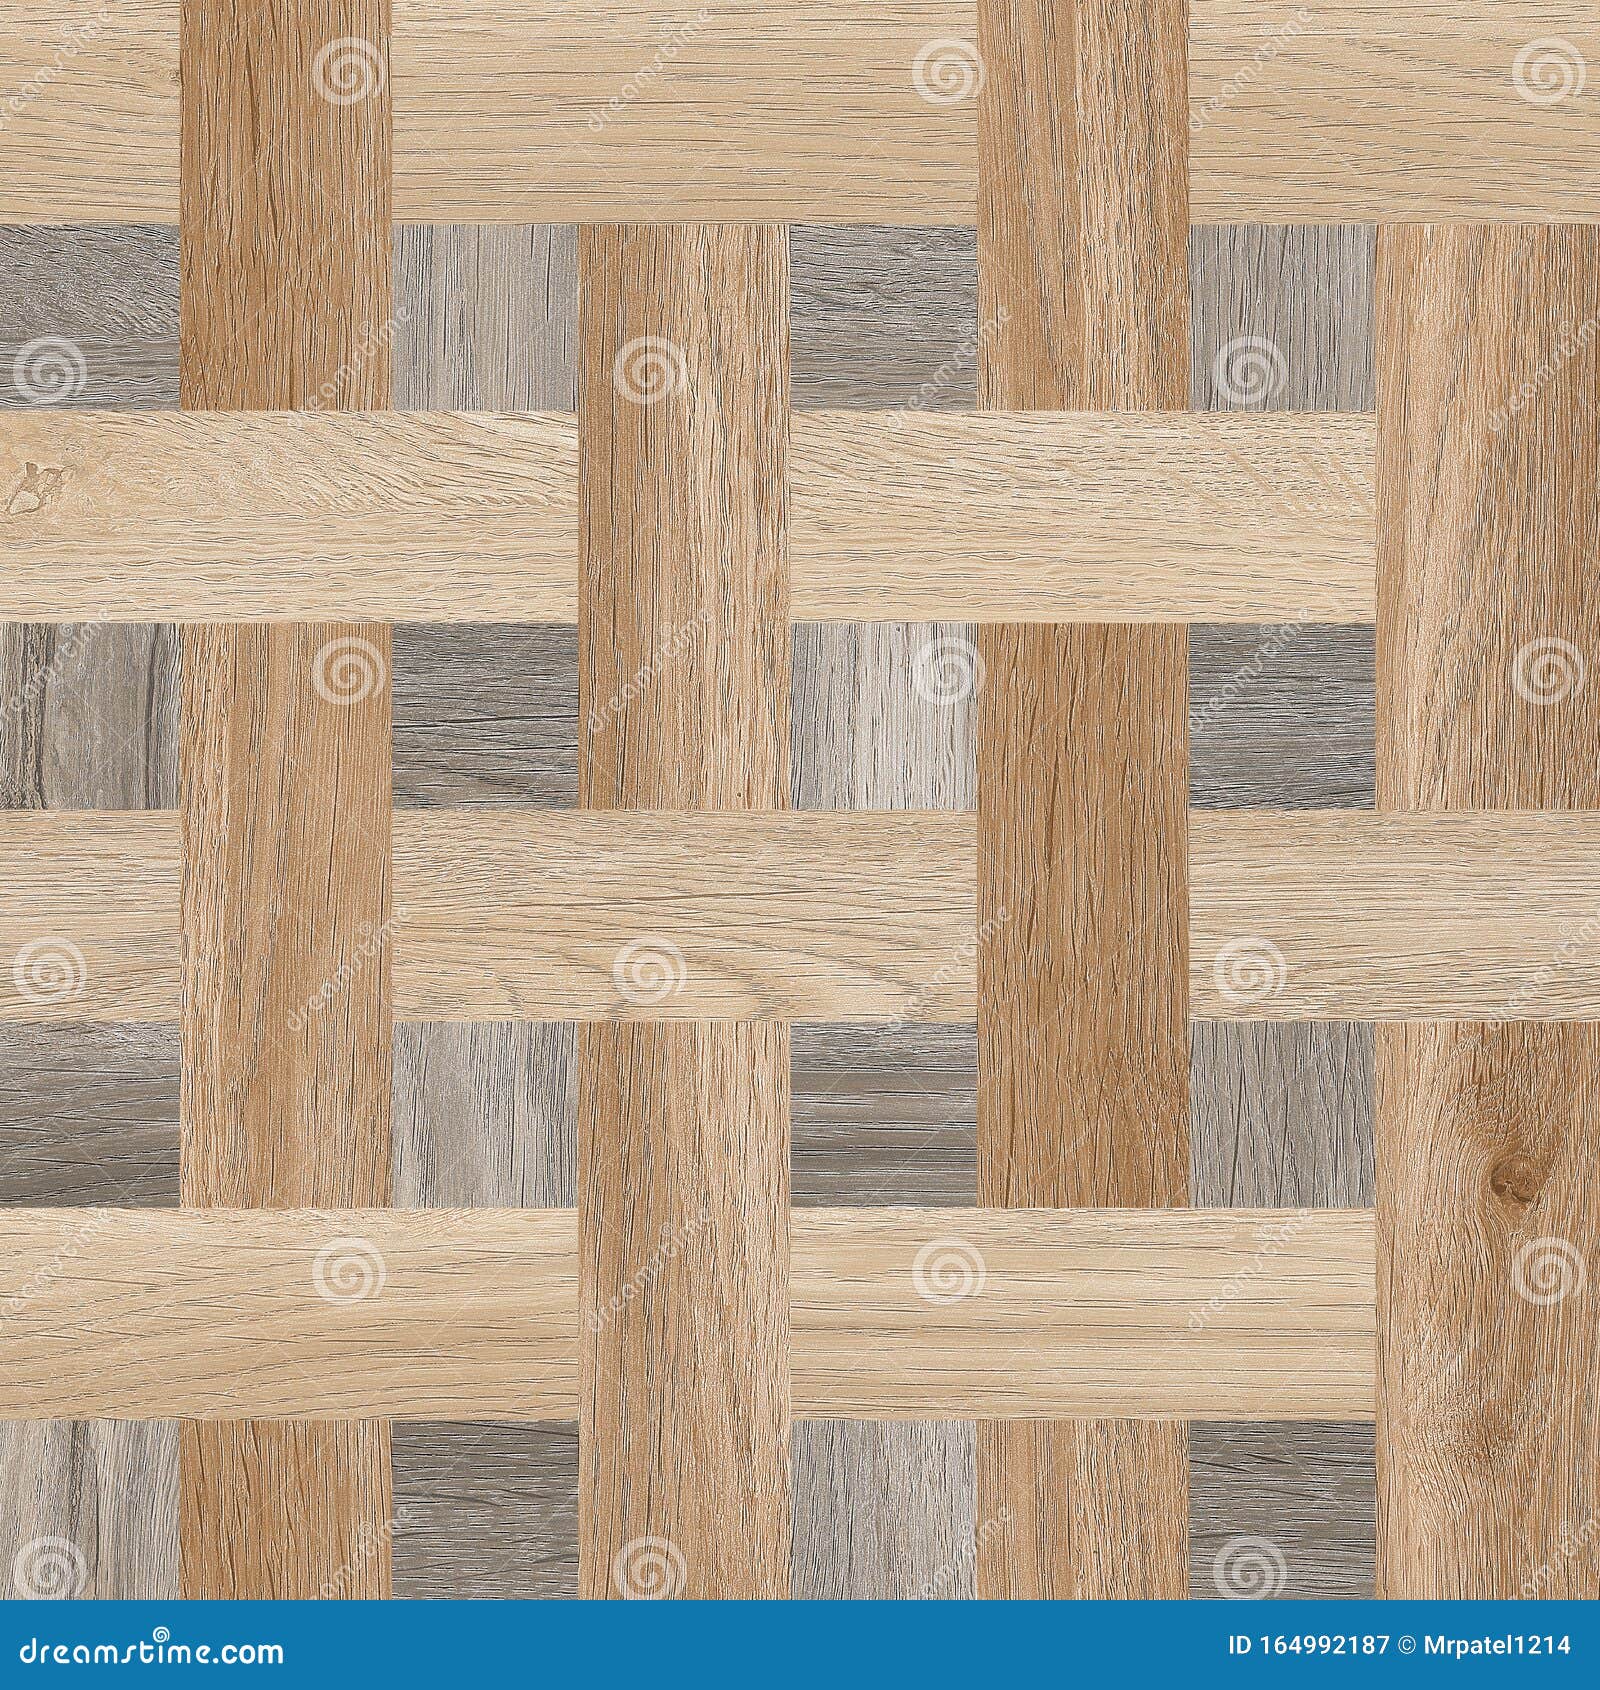 Wooden Geometric Pattern Tile Mosaic Tile Stock Image Image Of